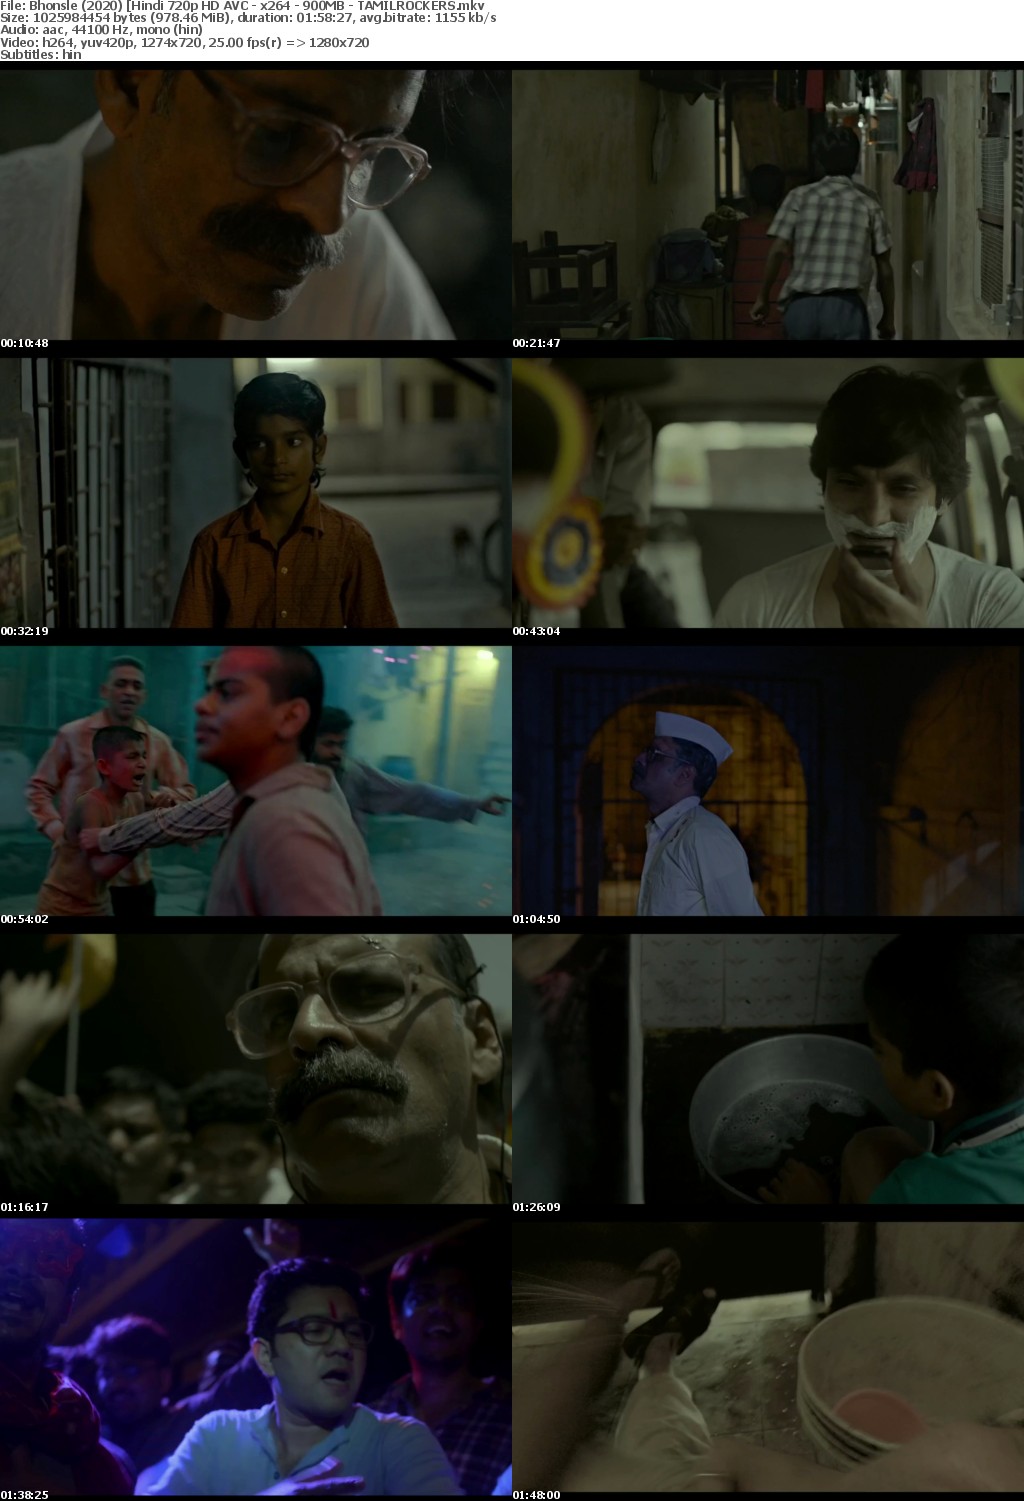 Bhonsle (2020) Hindi 720p HD AVC - x264 - 900MB - TAMILROCKERS